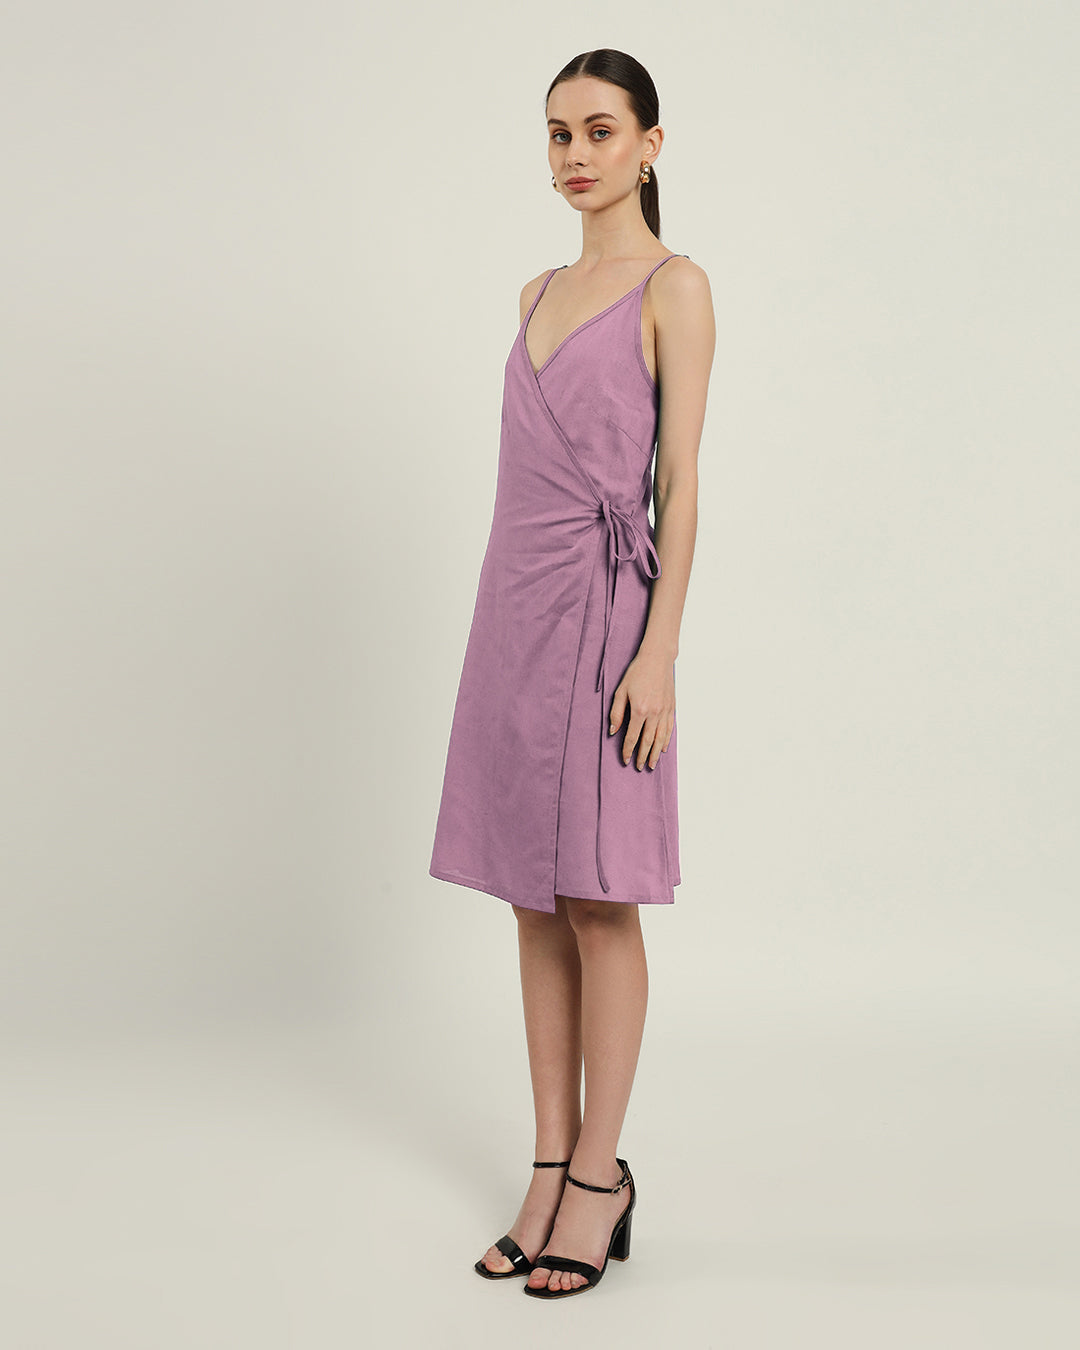 The Chambéry Purple Swirl Cotton Dress